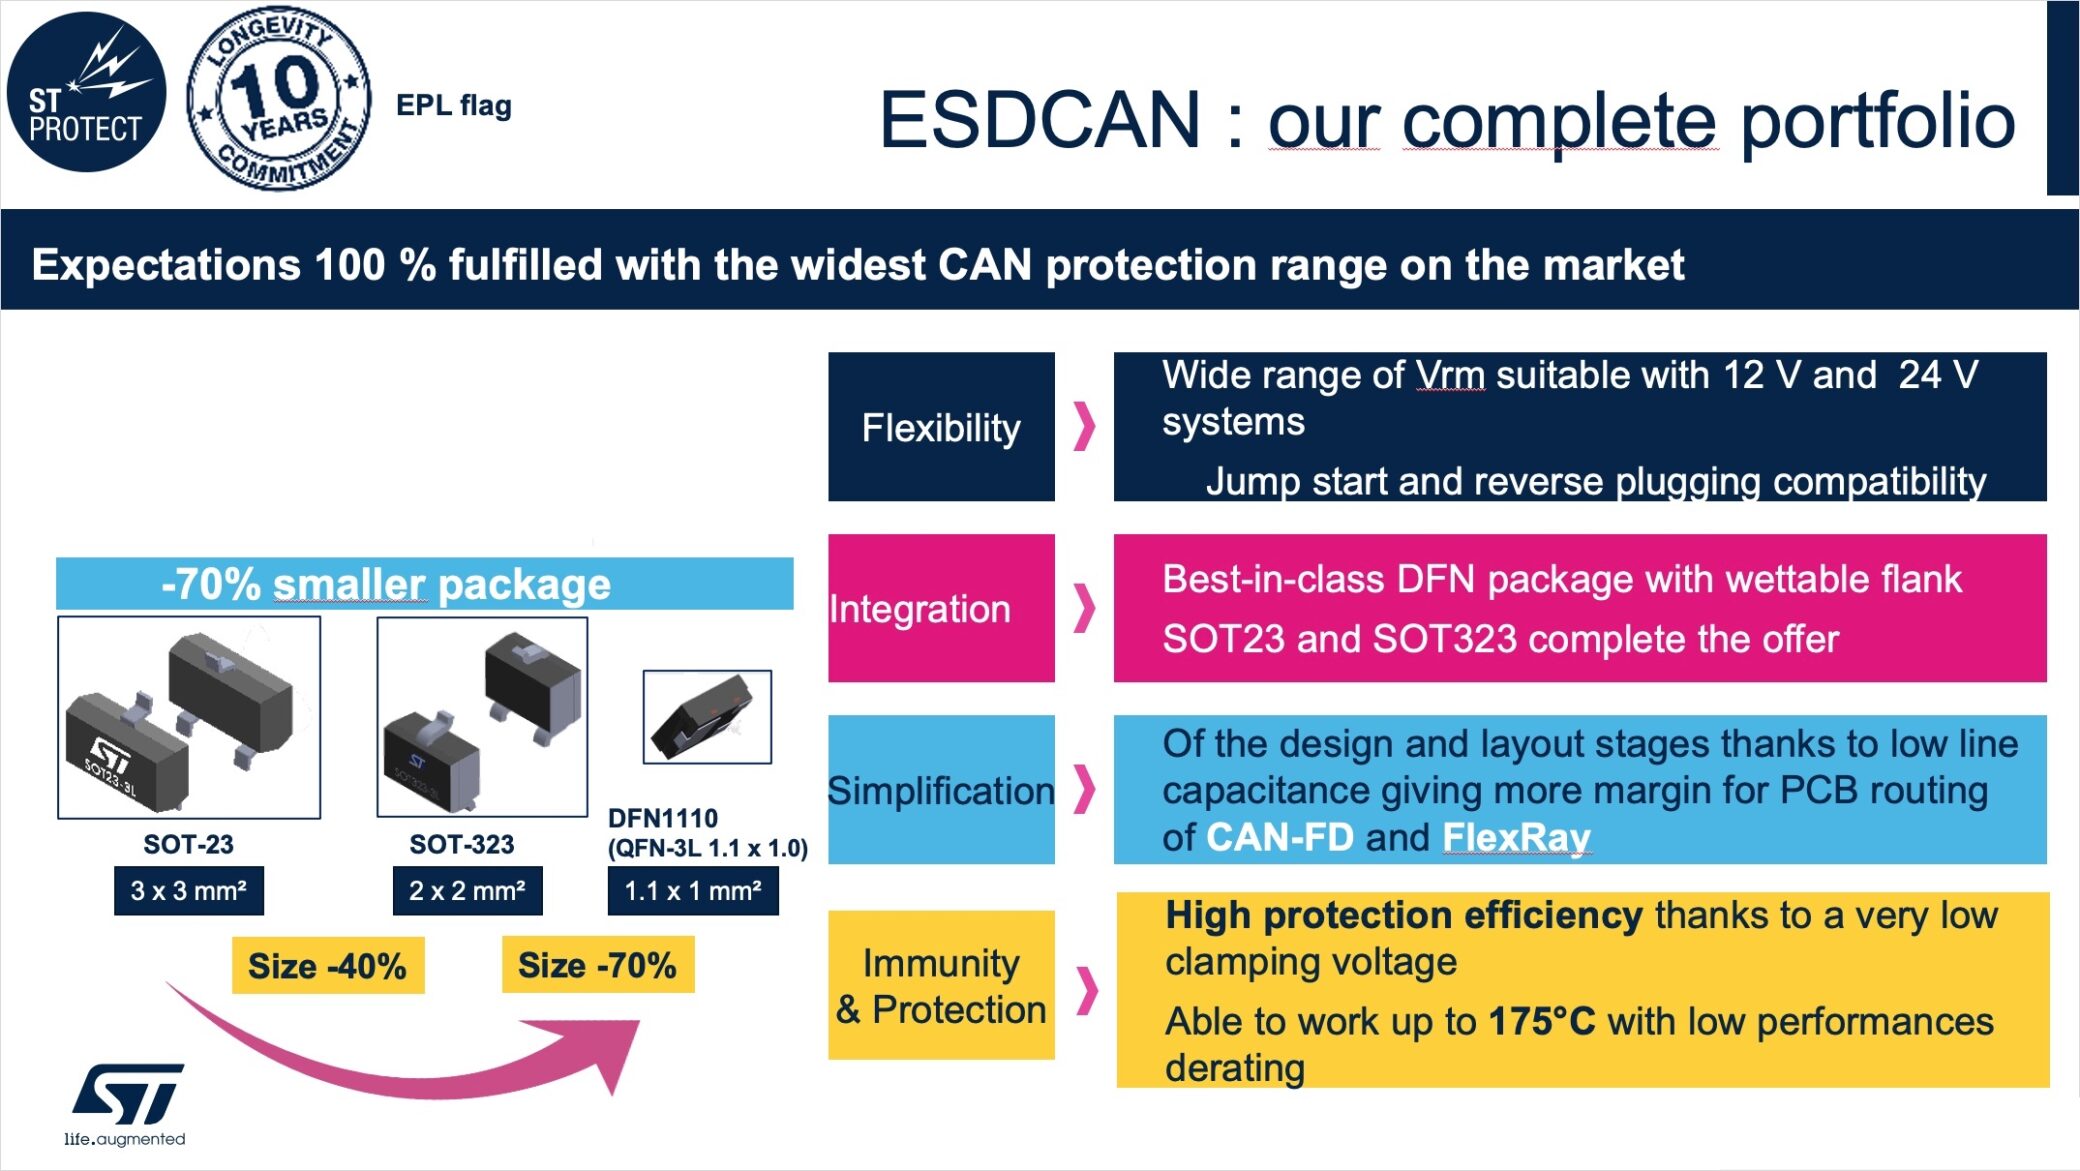 ESDCAN : our complete portfolio